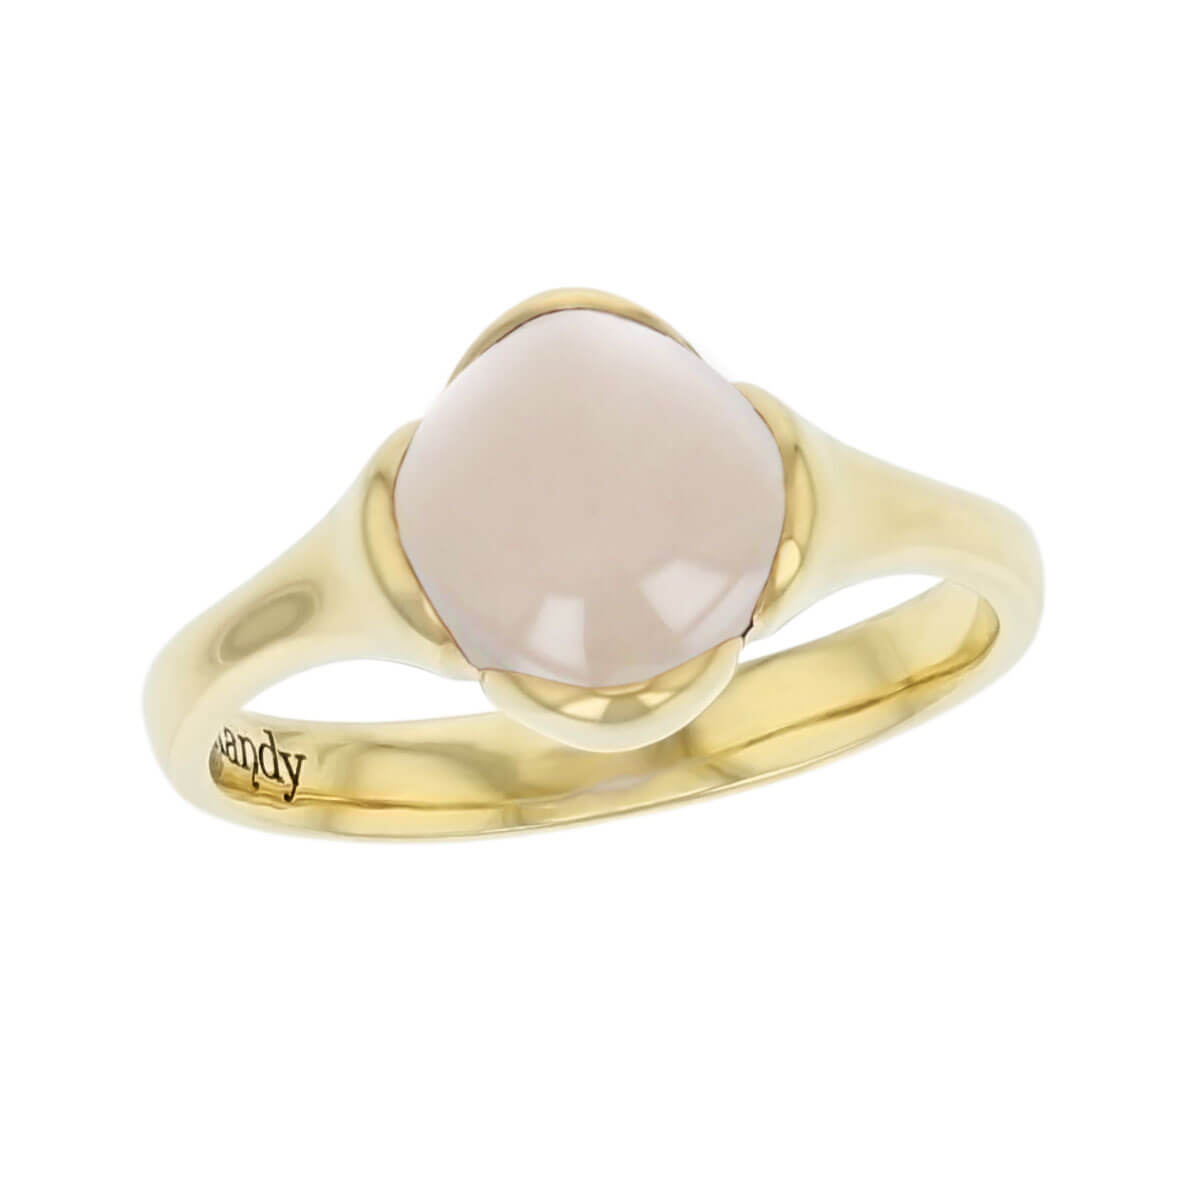 18ct yellow gold pink cushion cut cabochon rose quartz gemstone dress ring, designer jewellery, gem, jewelry, handmade by Faller, Londonderry, Northern Ireland, Irish hand crafted, Kandy